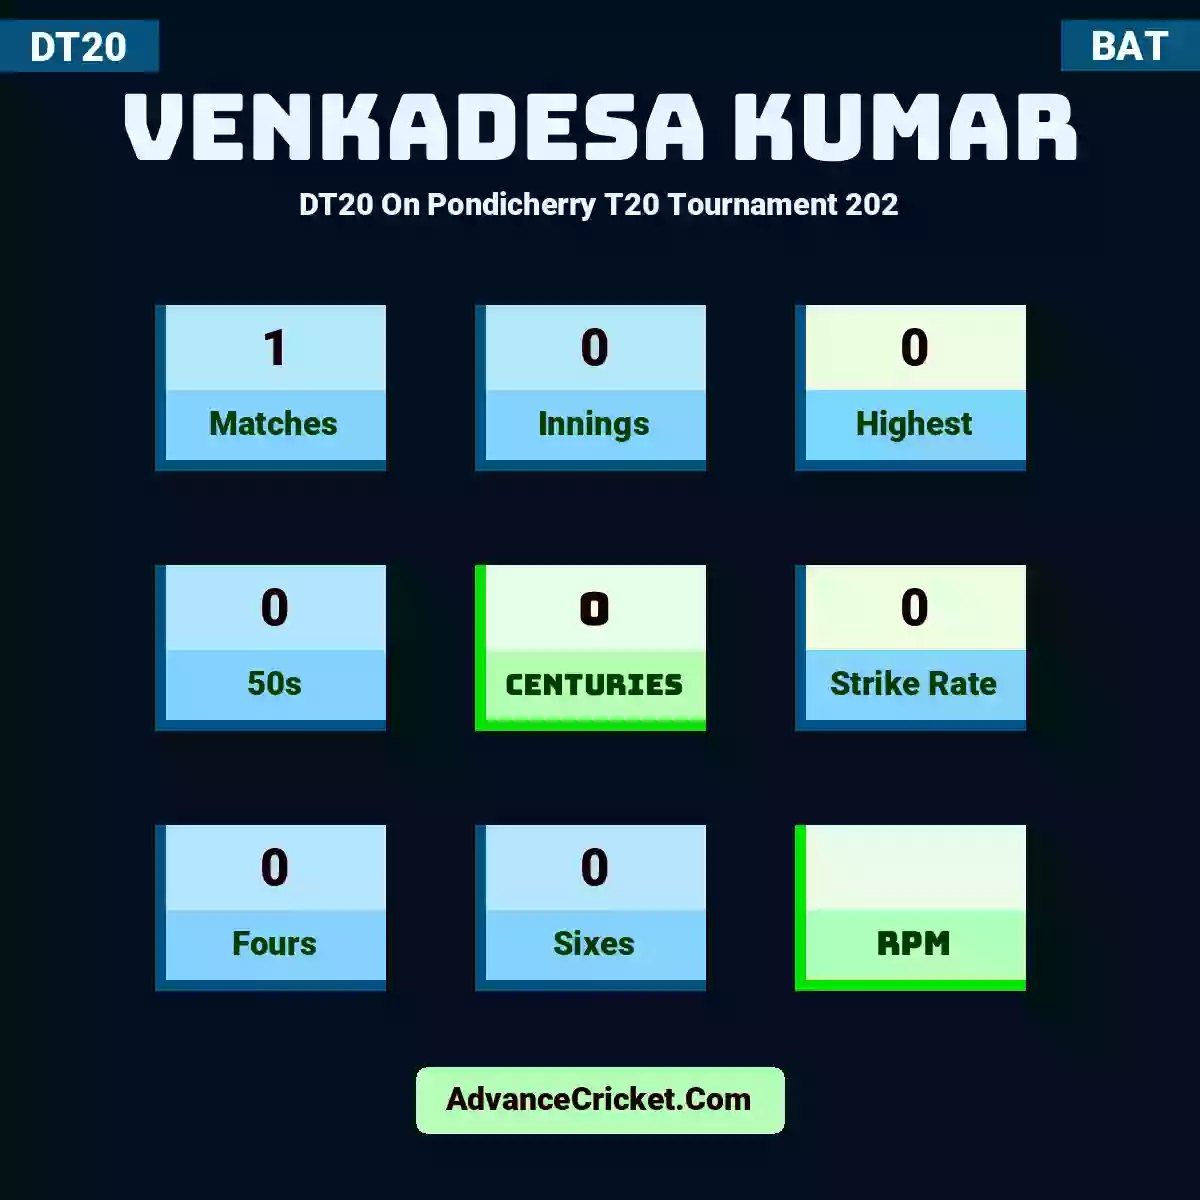 Venkadesa Kumar DT20  On Pondicherry T20 Tournament 202, Venkadesa Kumar played 1 matches, scored 0 runs as highest, 0 half-centuries, and 0 centuries, with a strike rate of 0. V.Kumar hit 0 fours and 0 sixes.